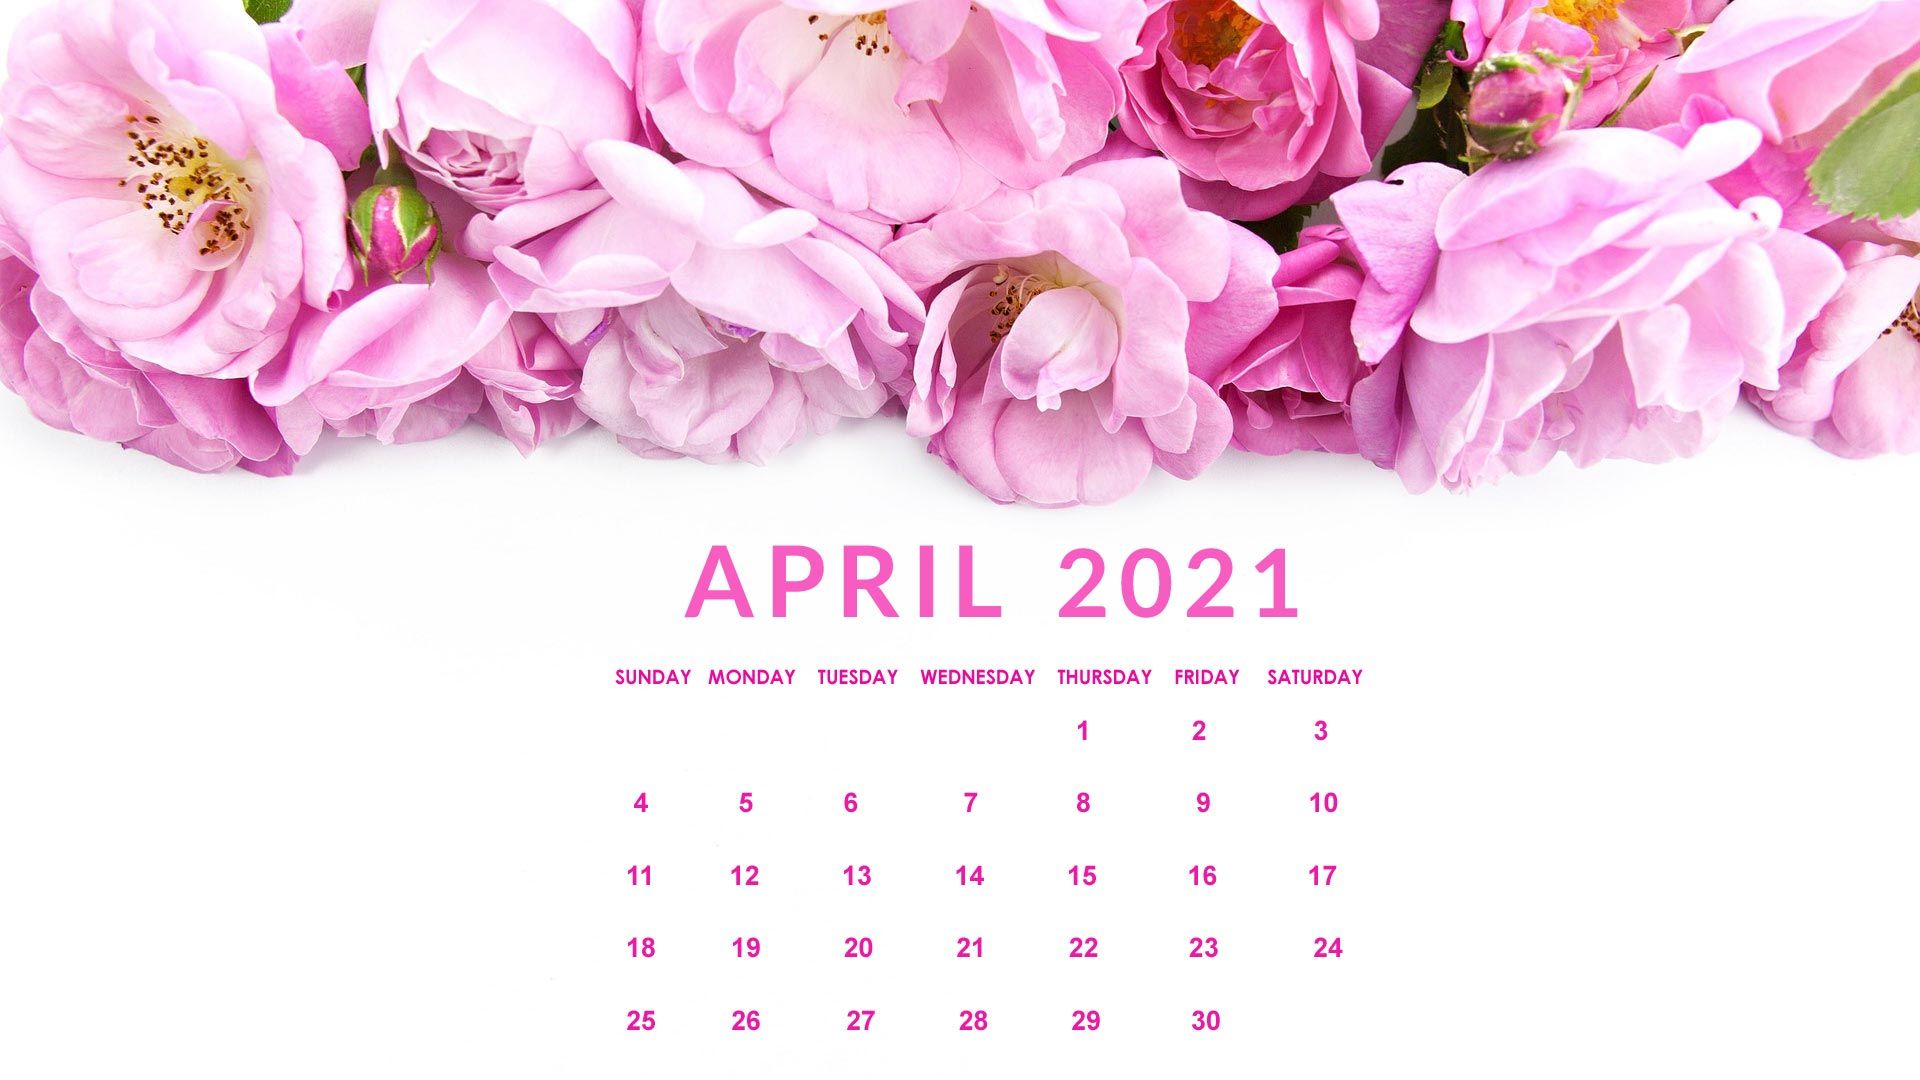 April 2021 calendar wallpaper desktop laptop computer HD background